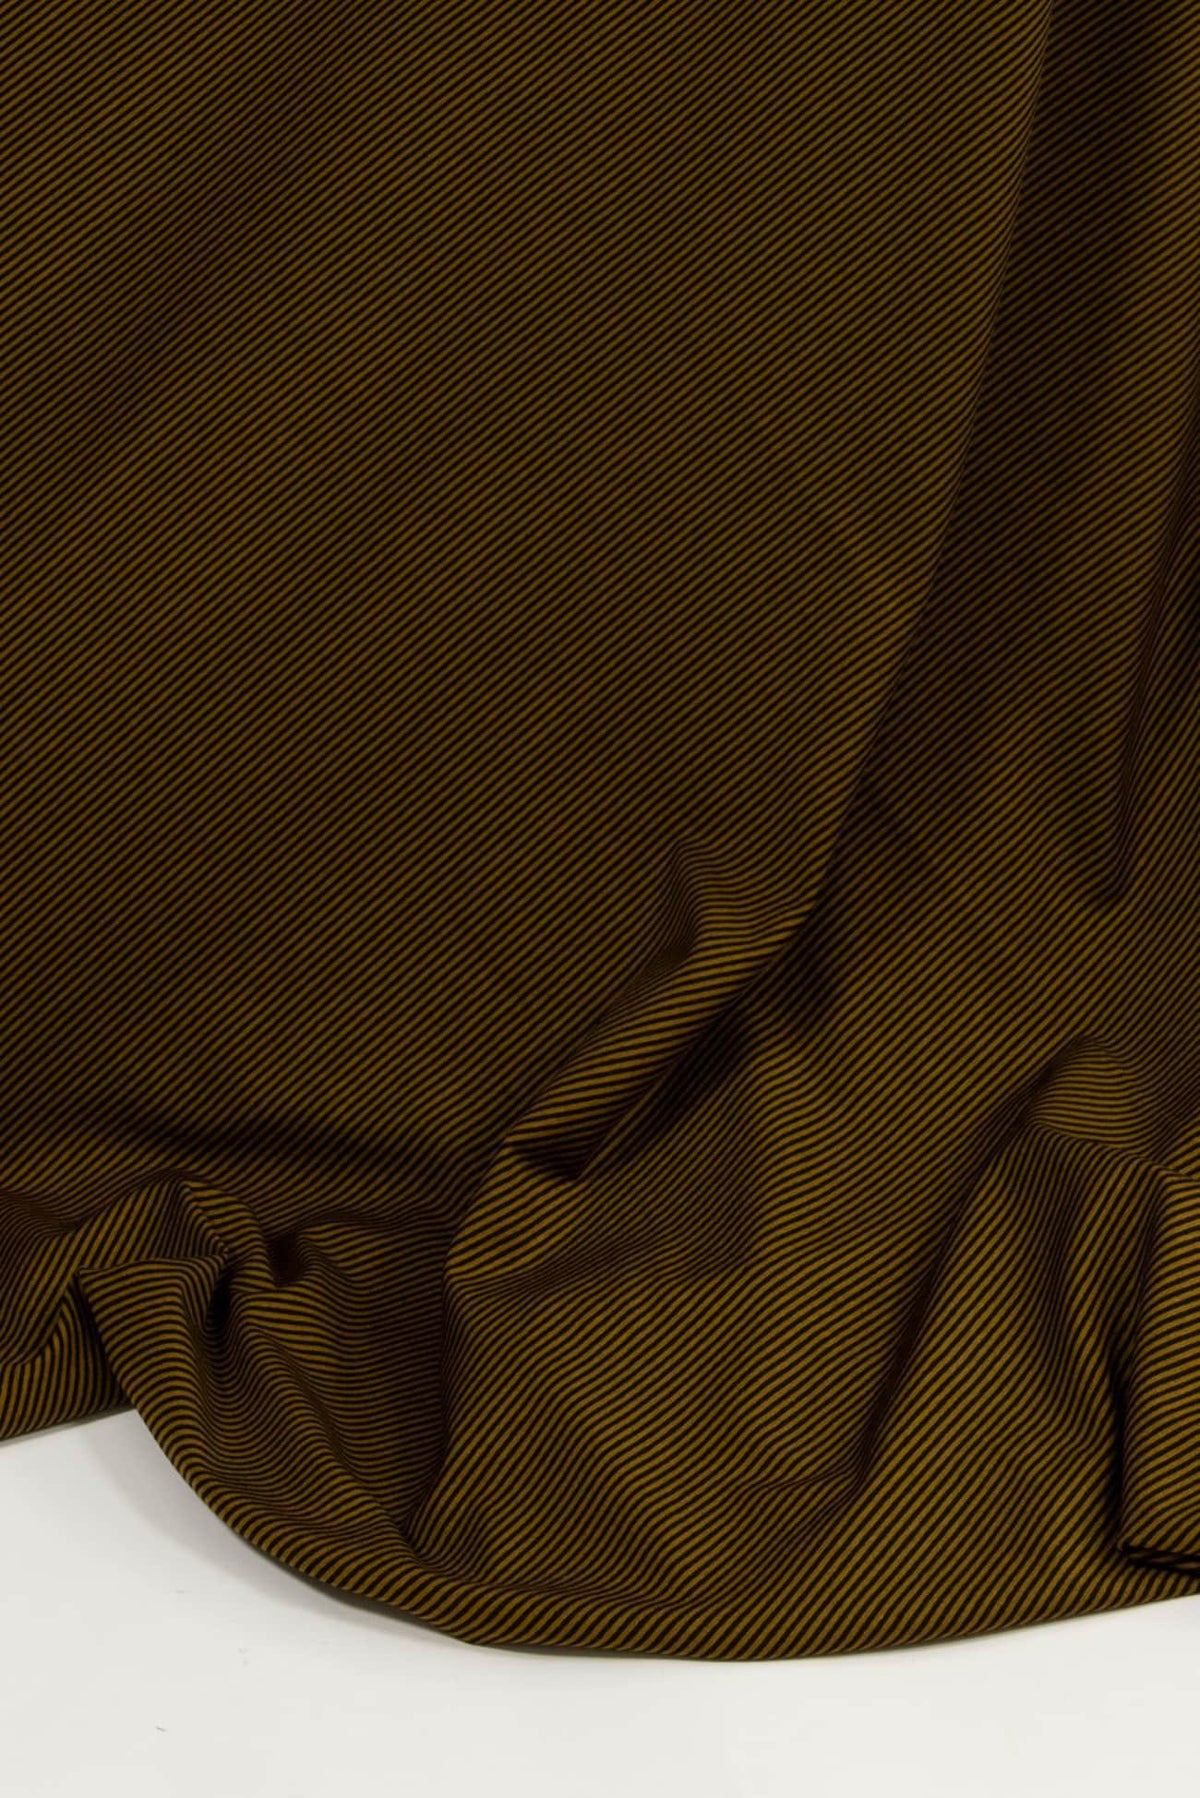 Old Gold Stripe USA Knit - Marcy Tilton Fabrics